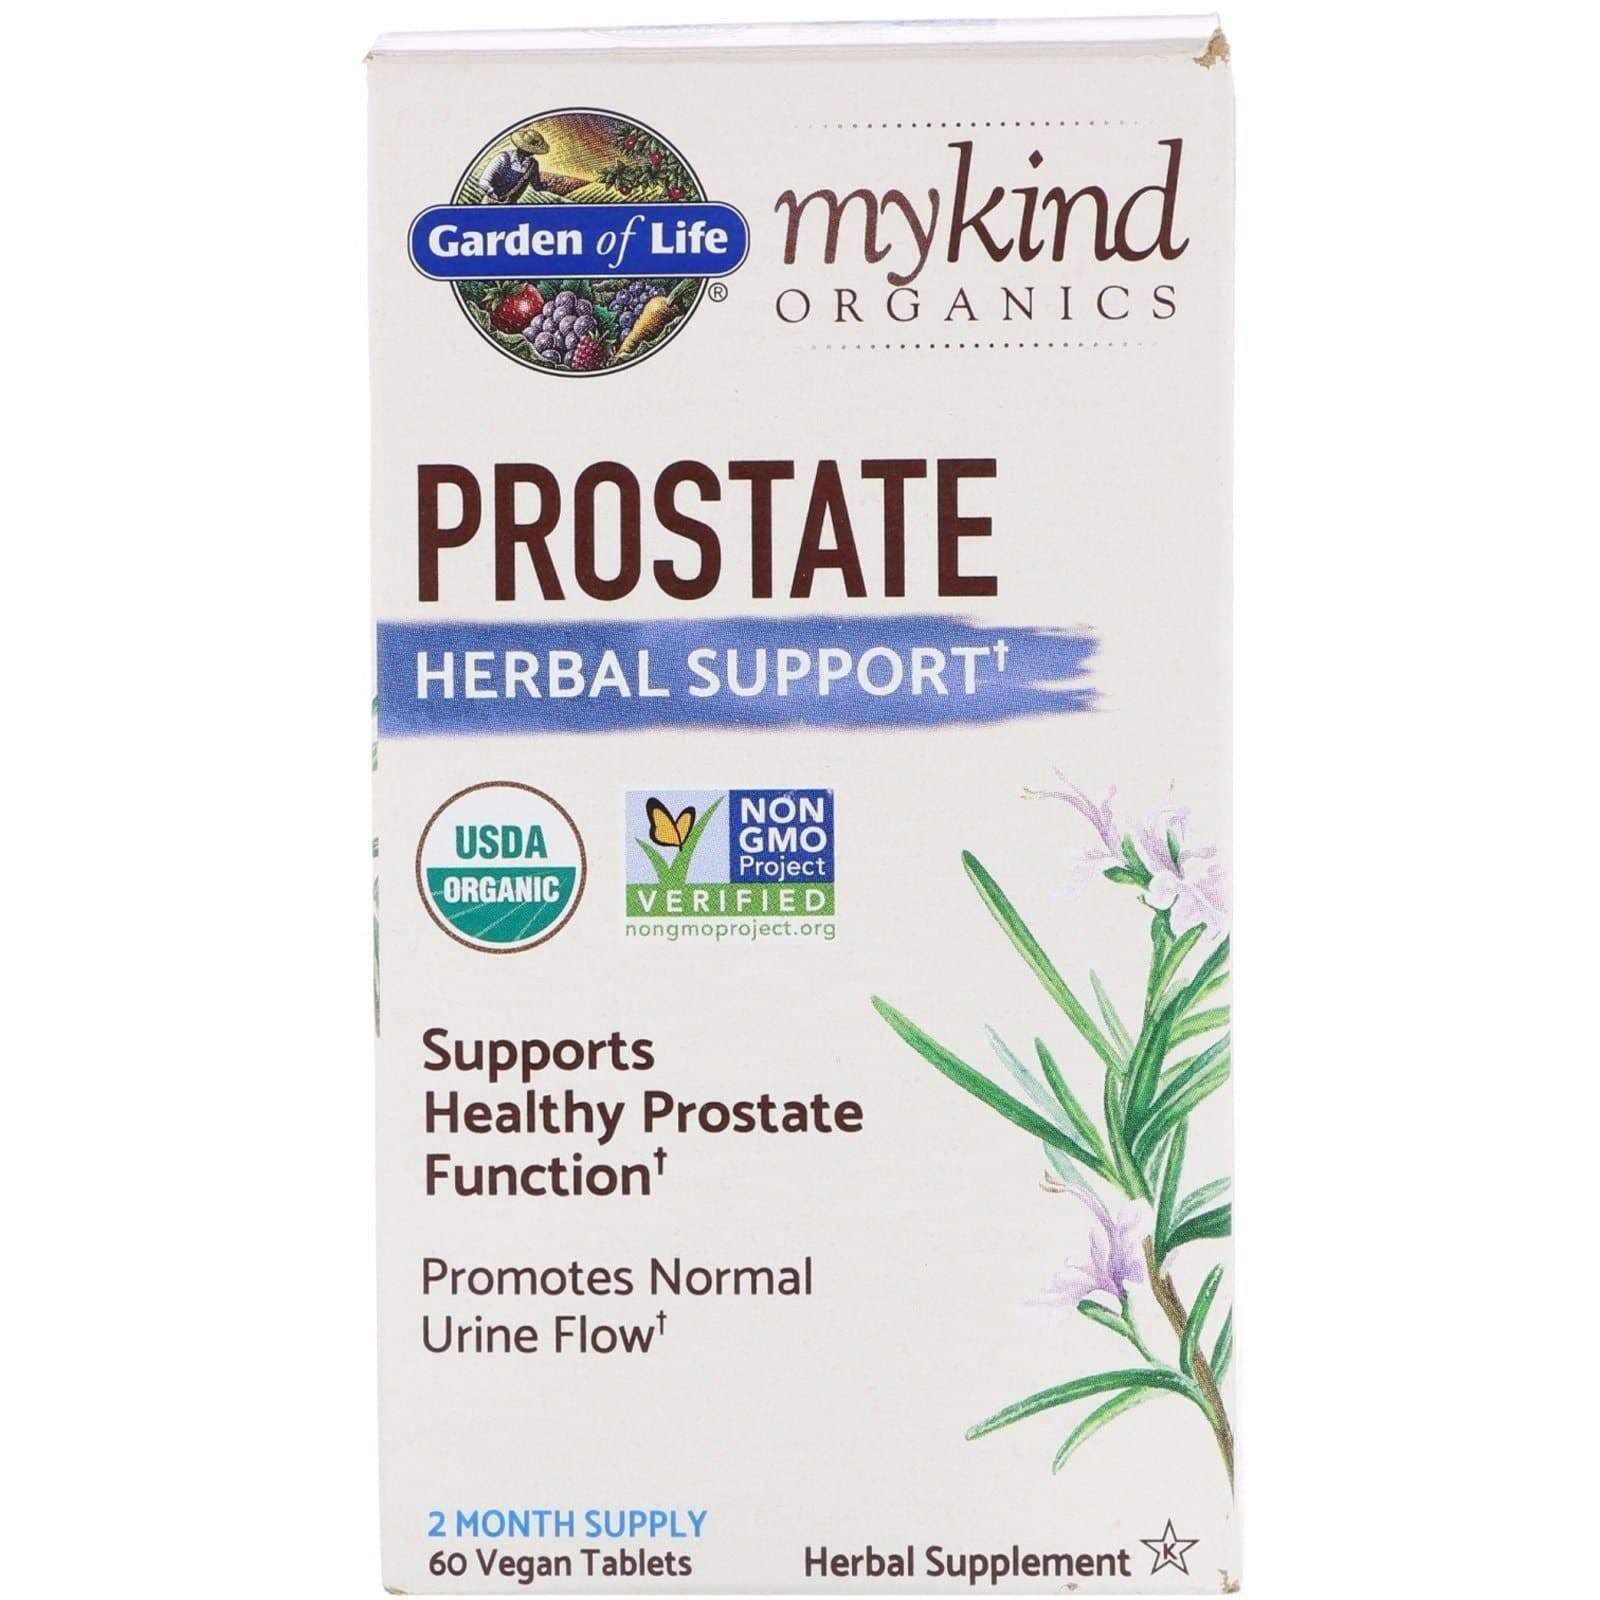 Garden of Life - mykind Organics Prostate Herbal Support - 60 Vegan